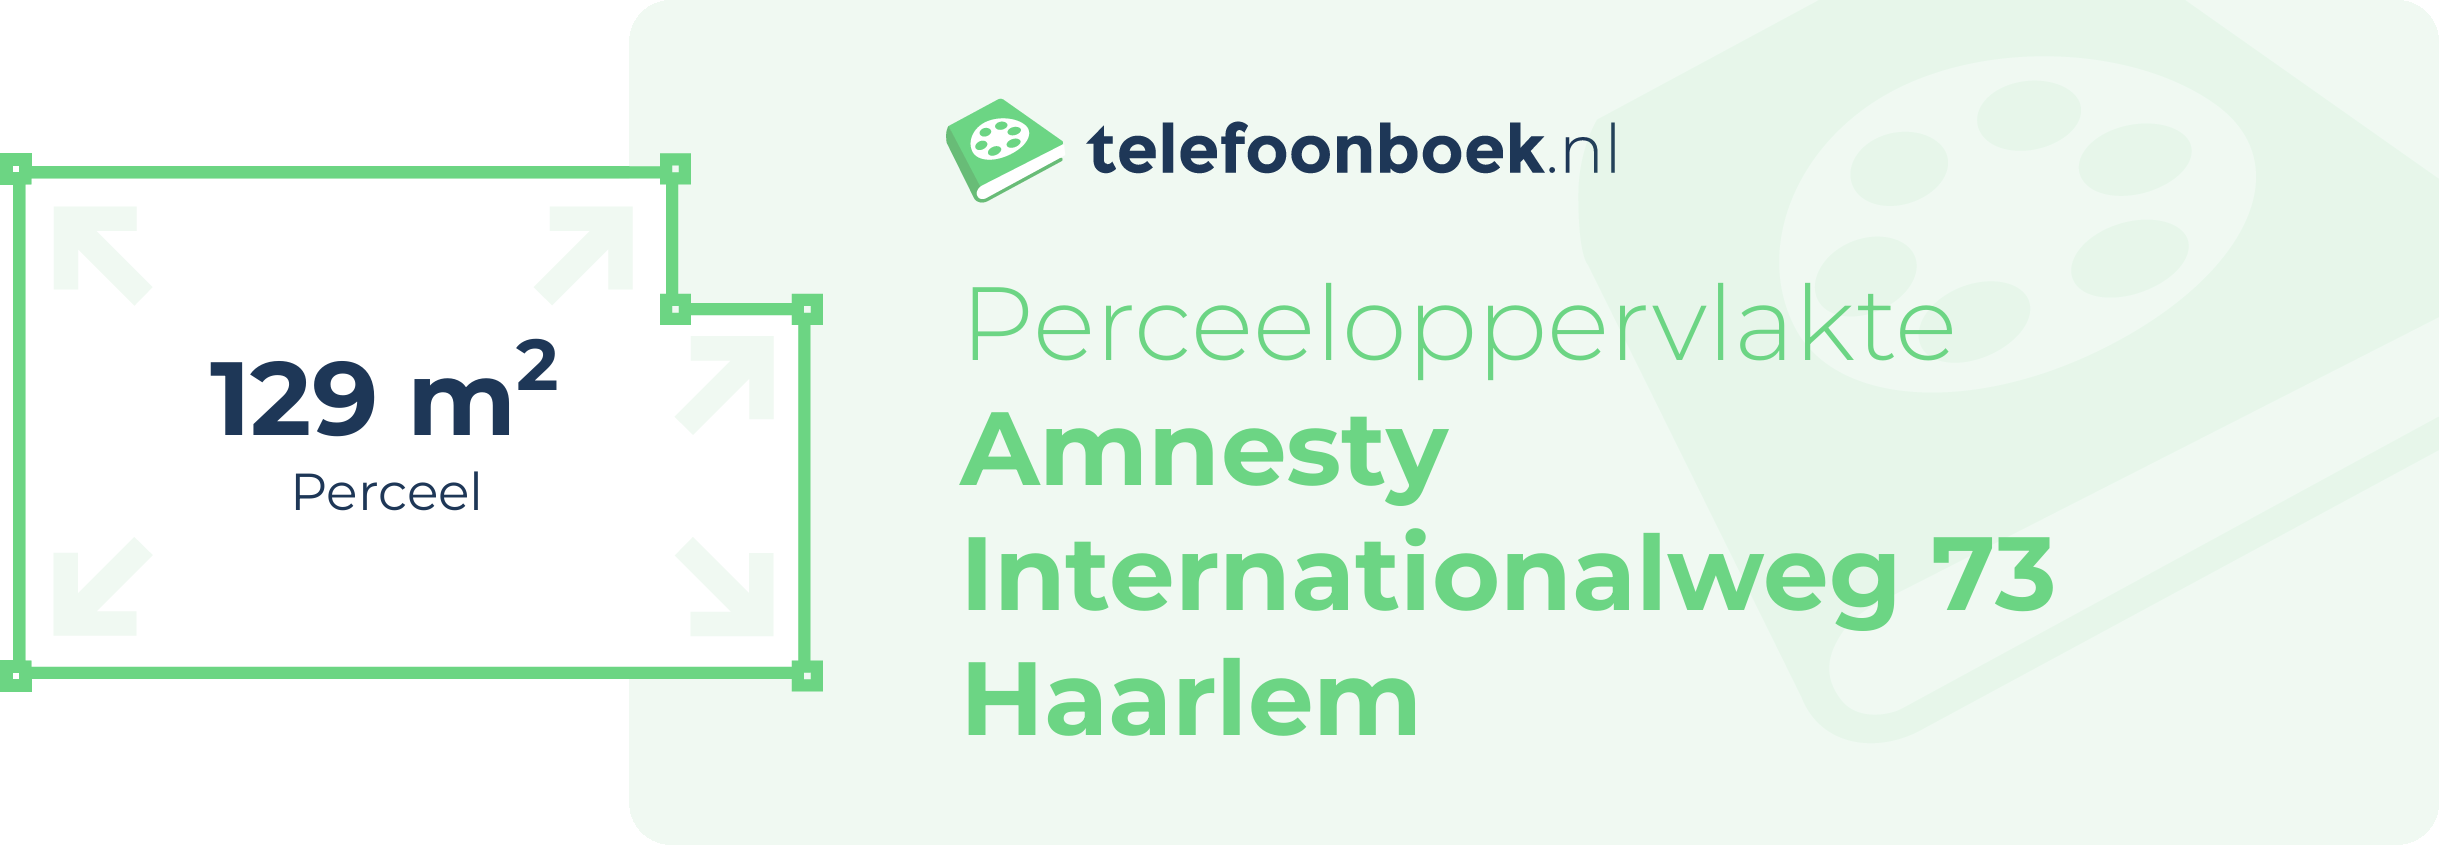 Perceeloppervlakte Amnesty Internationalweg 73 Haarlem